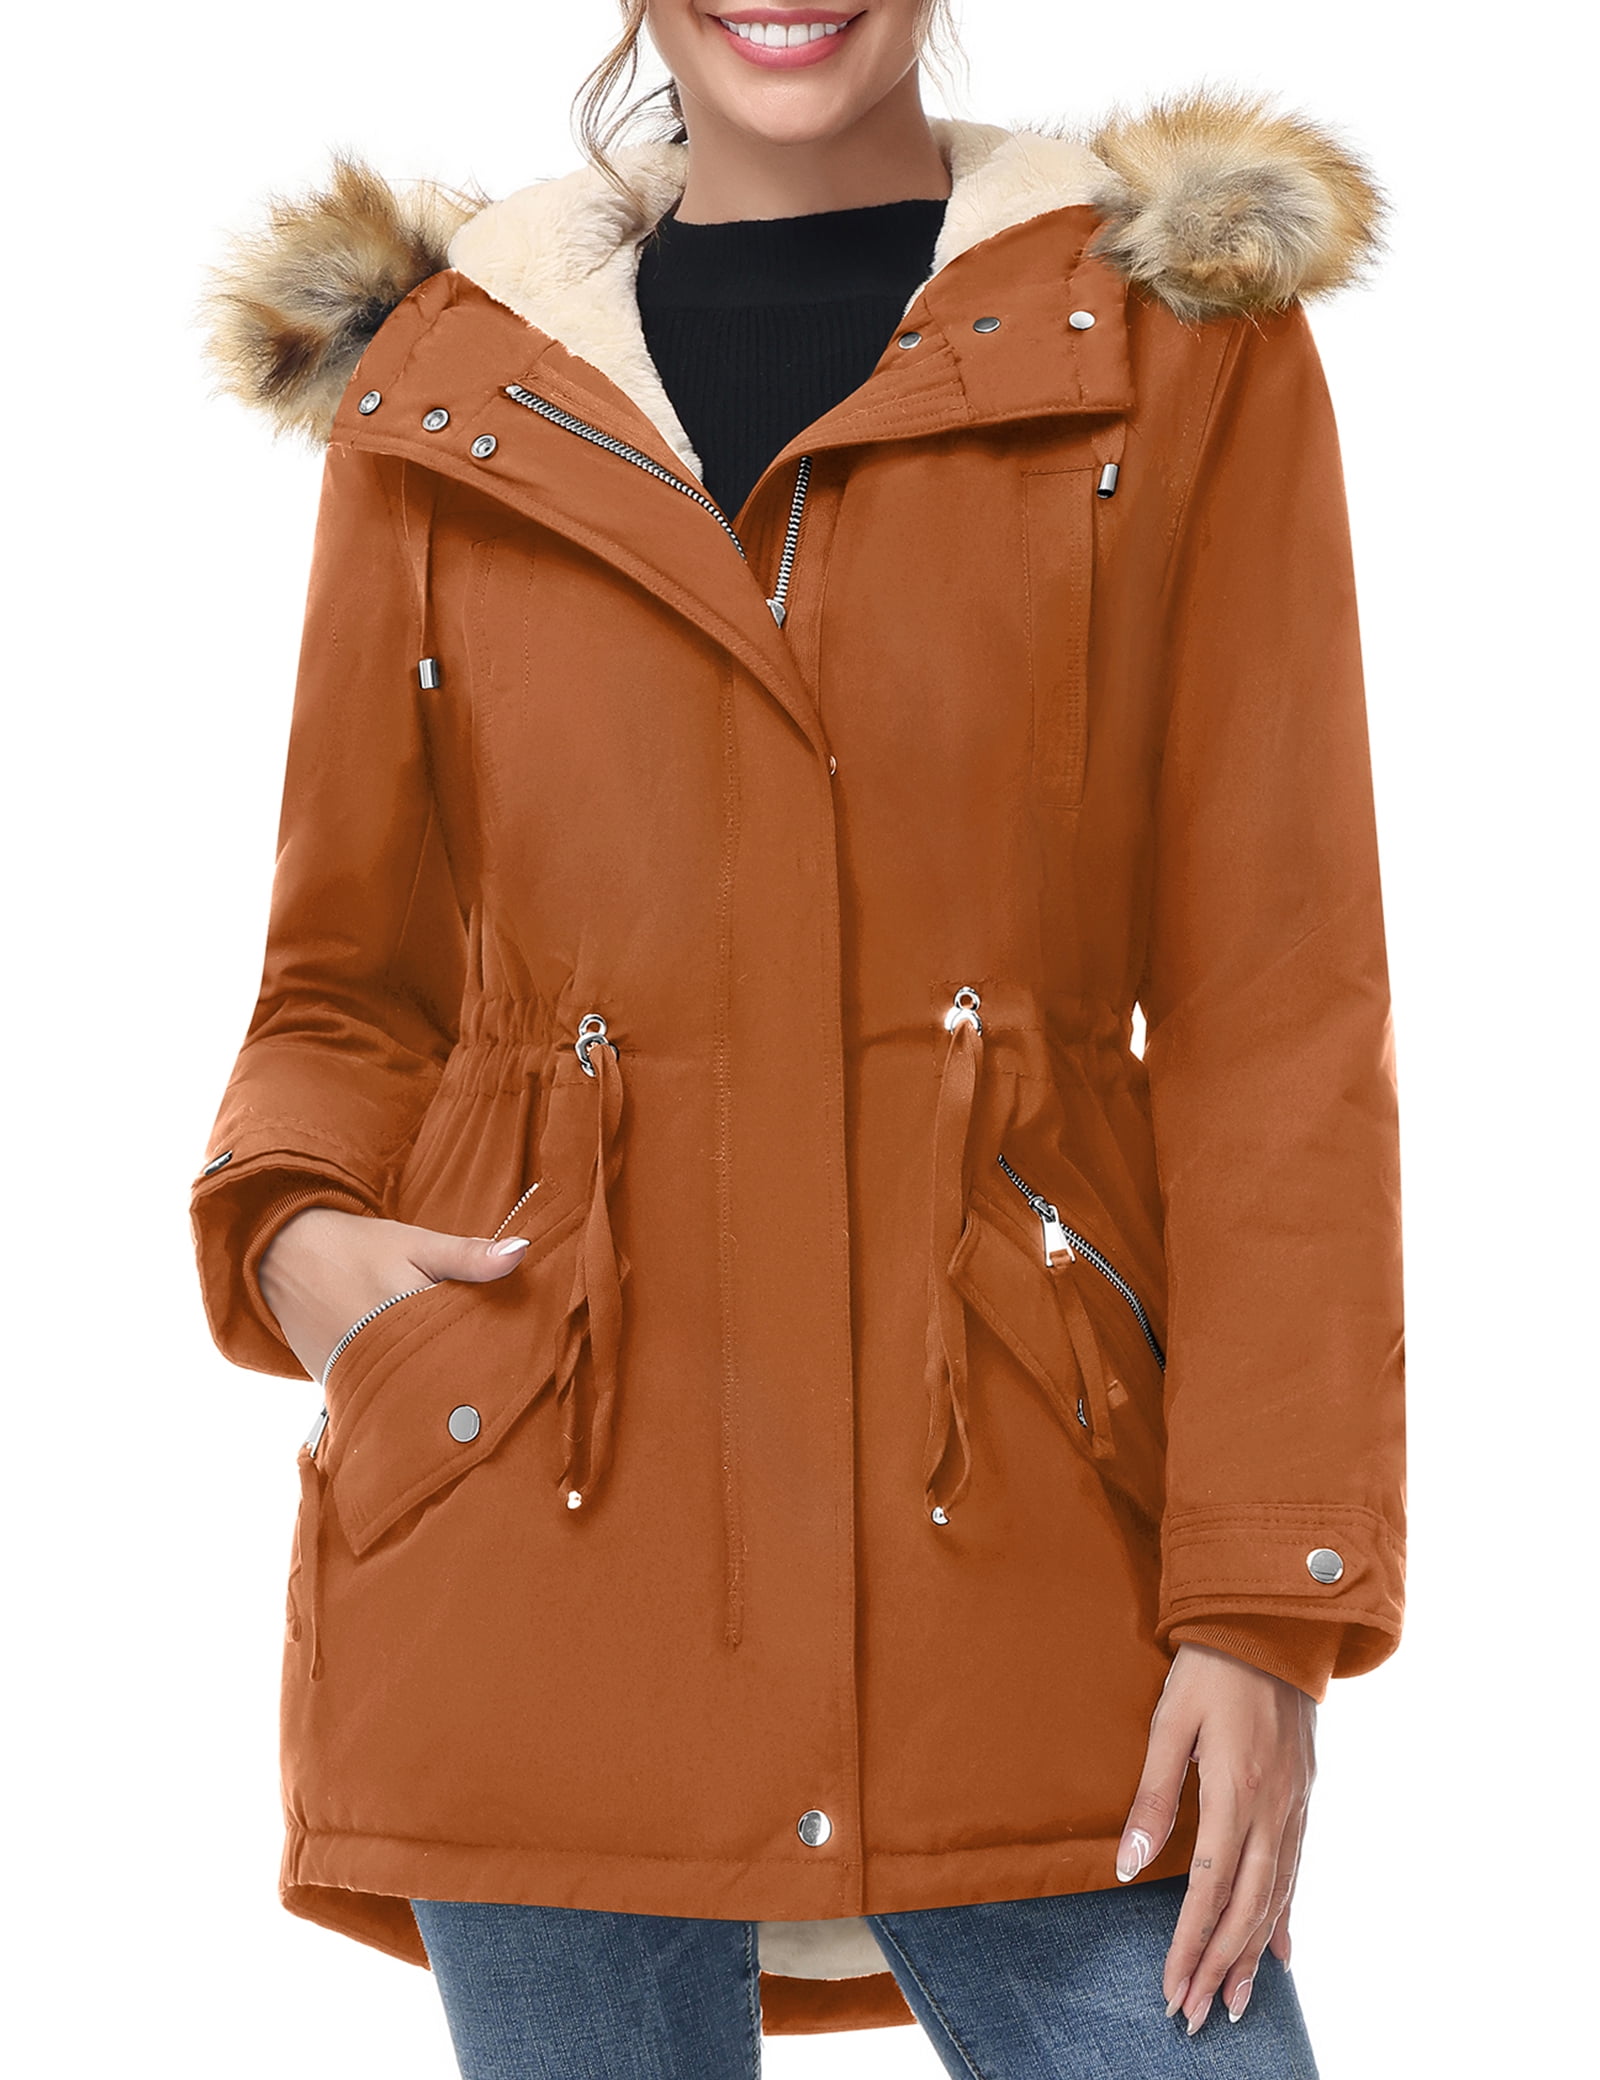 ANOTHER CHOICE Women's Winter Coat Hooded Parka Coat Warm Fleece Lined  Winter Coats 